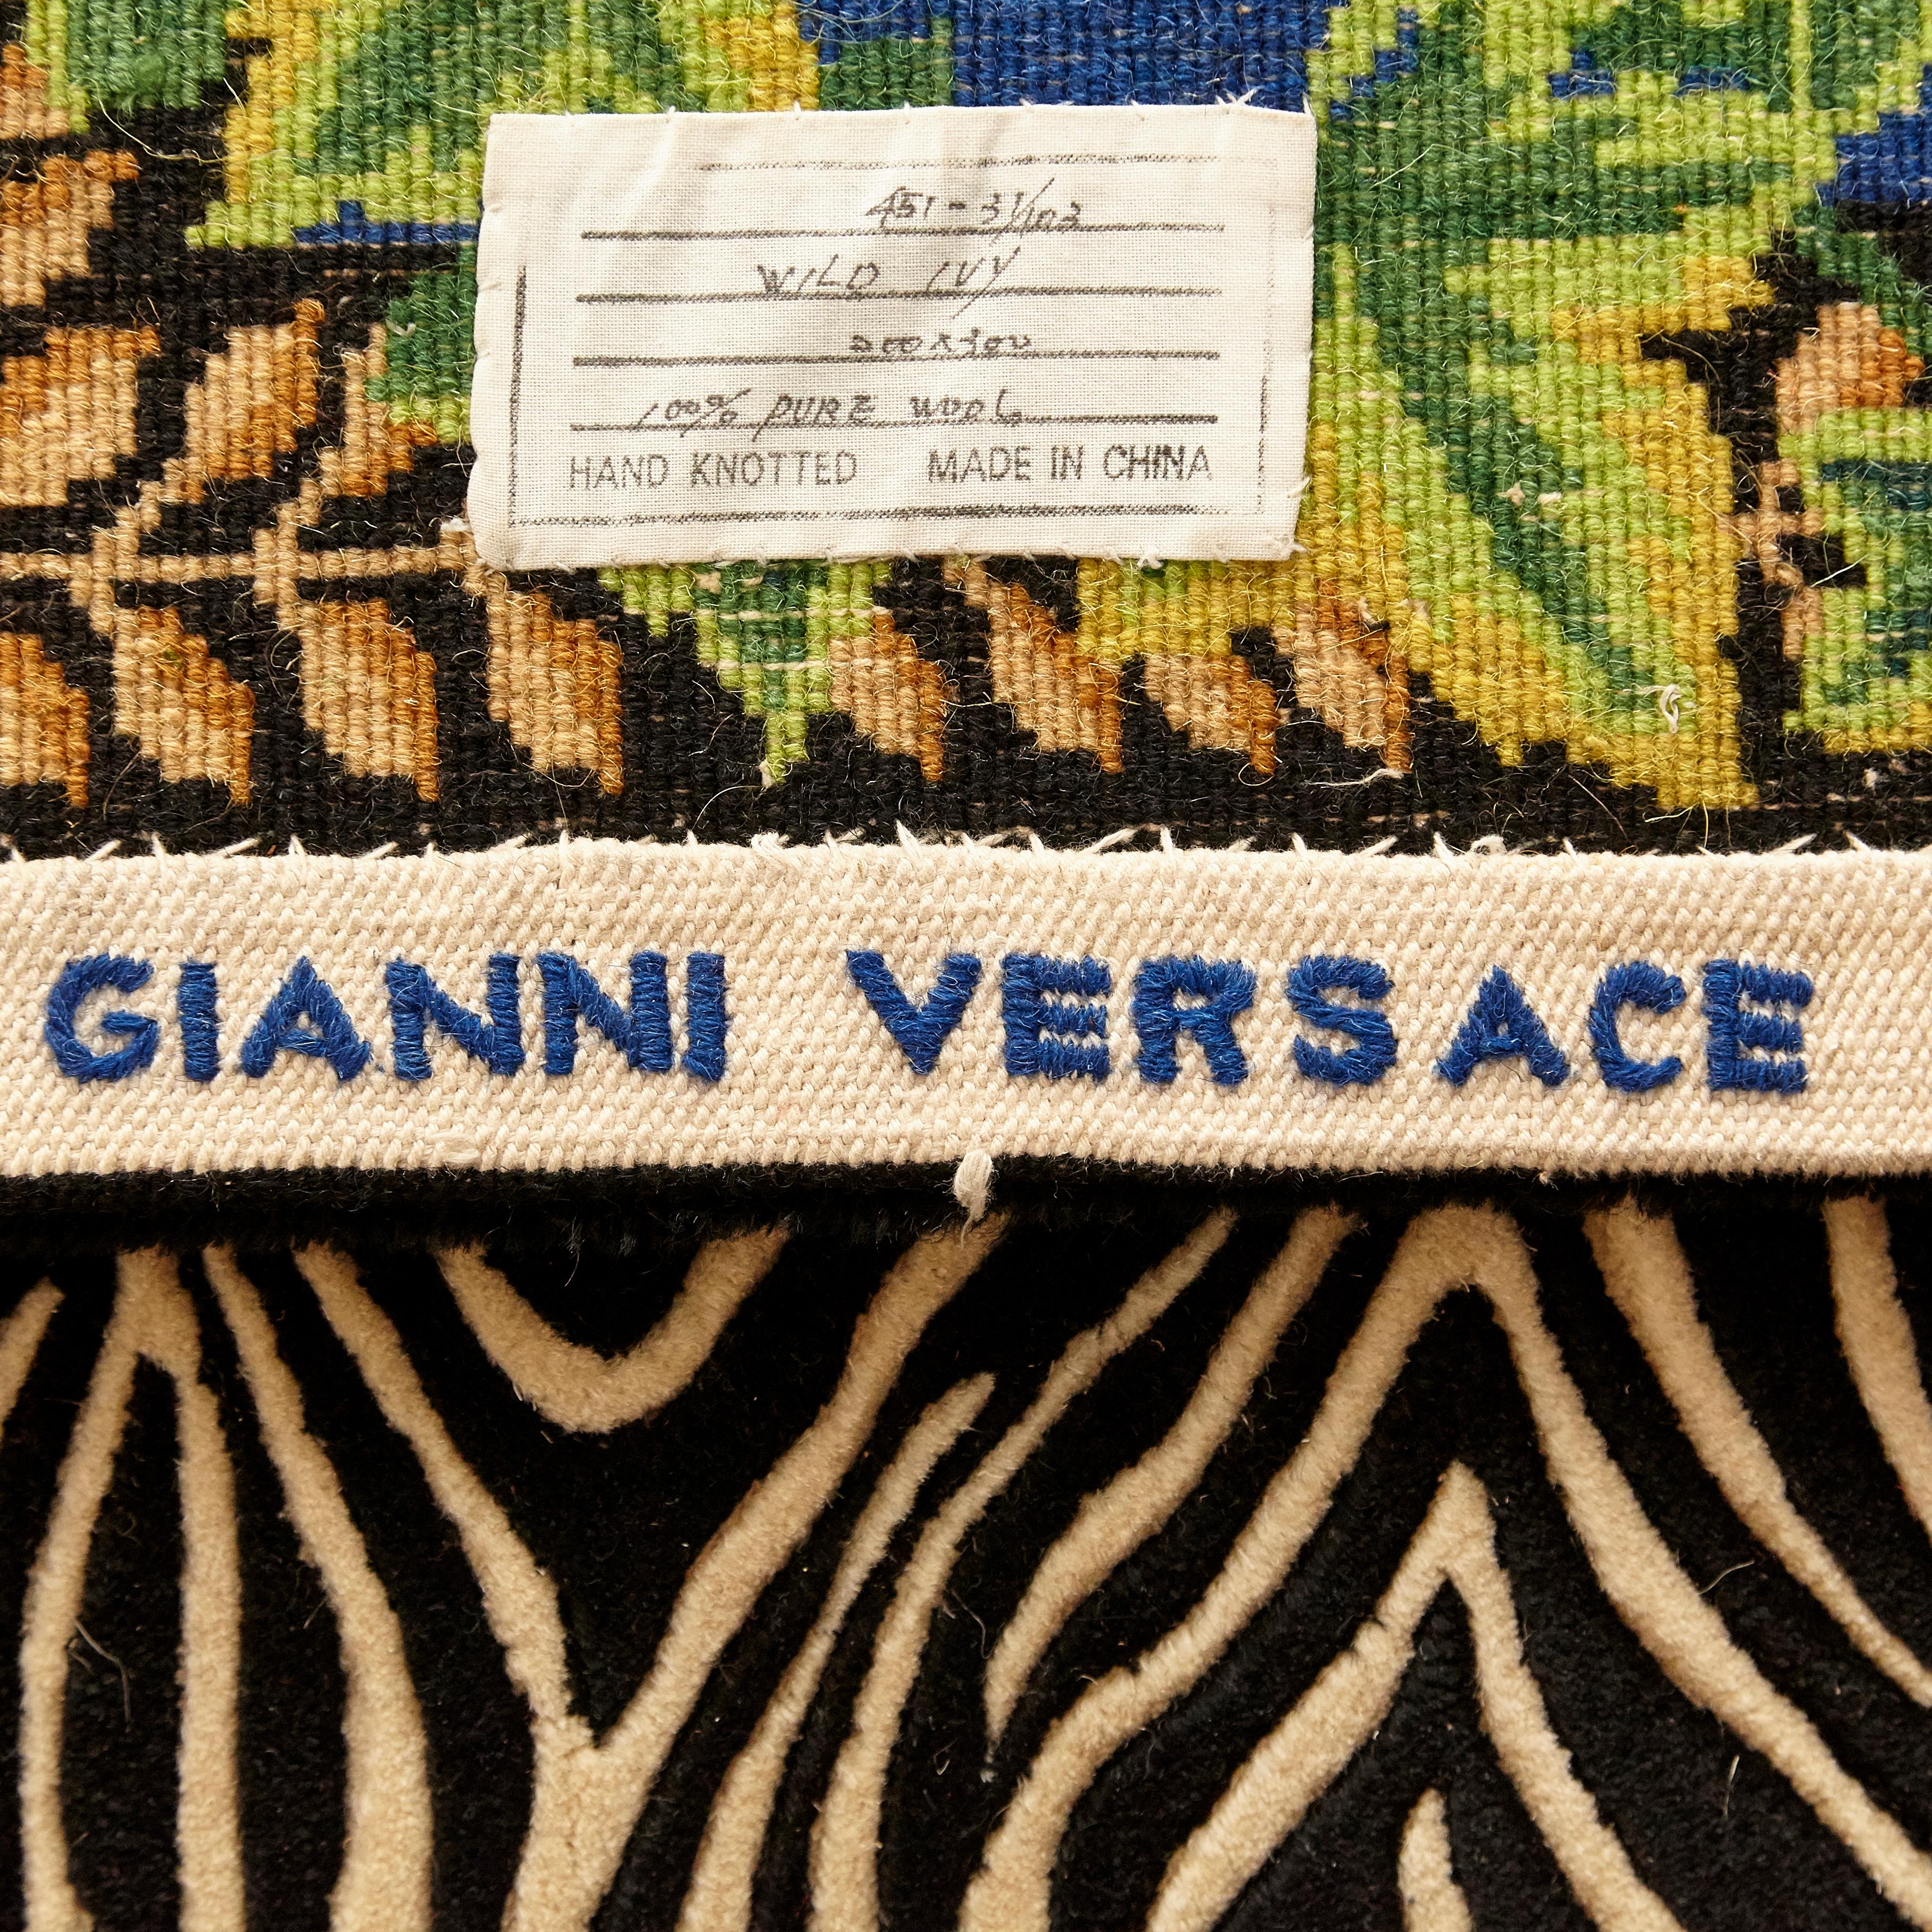 Gianni Versace Collection Rug Wild Ivy, Gold Zebra Animal Print, 1980 6